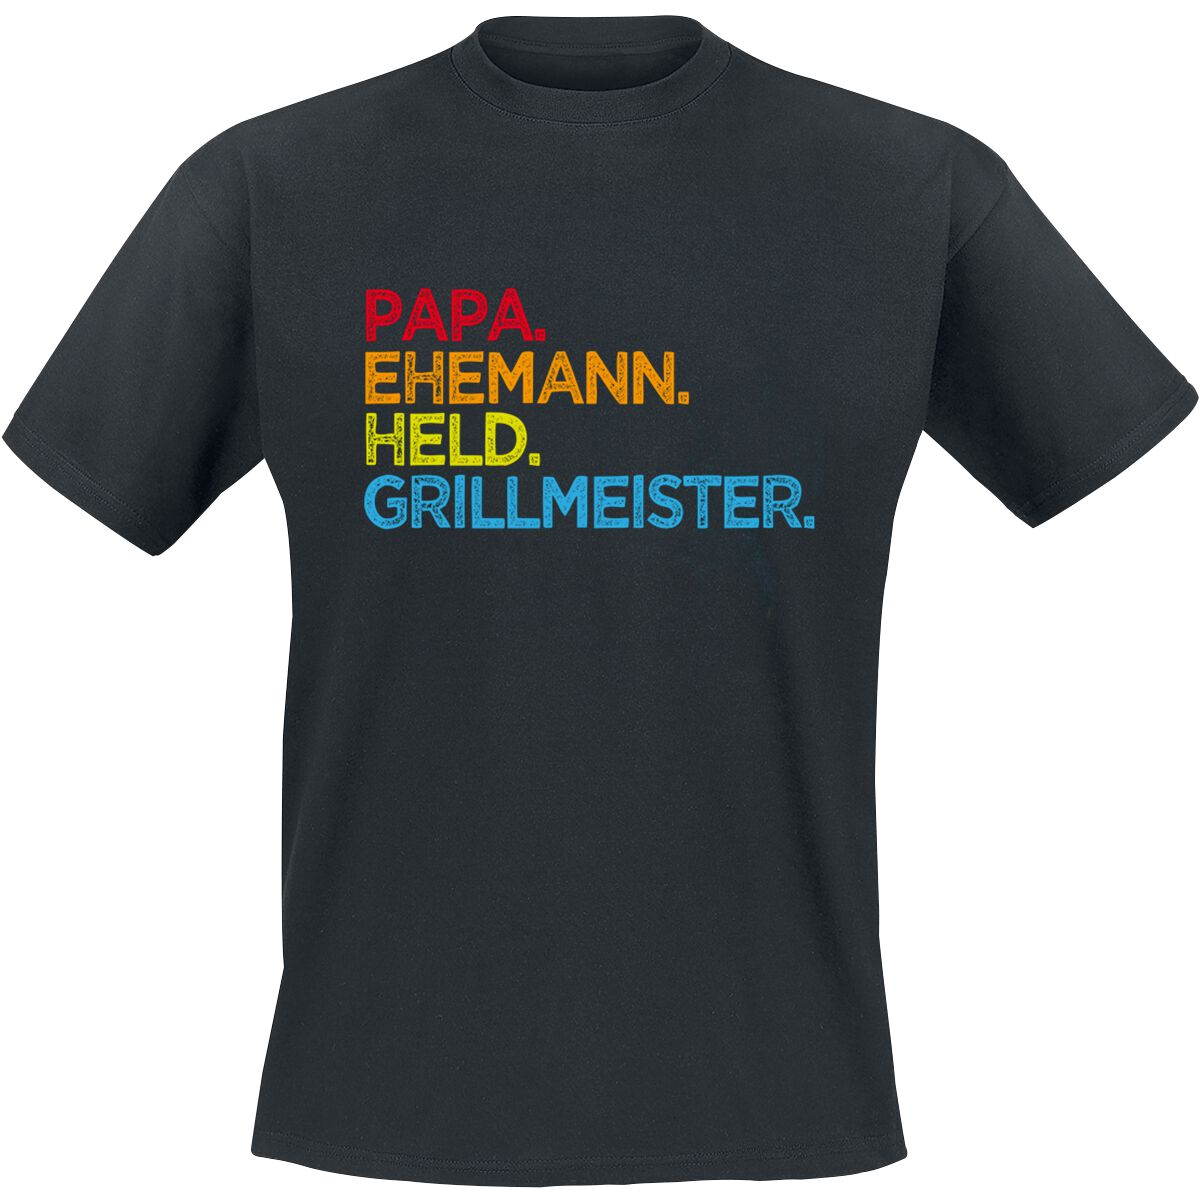 familie & freunde t-shirt - papa. ehemann. held. grillmeister - s bis 5xl - fÃ¼r mÃ¤nner - grÃ¶ÃŸe 5xl - schwarz uomo